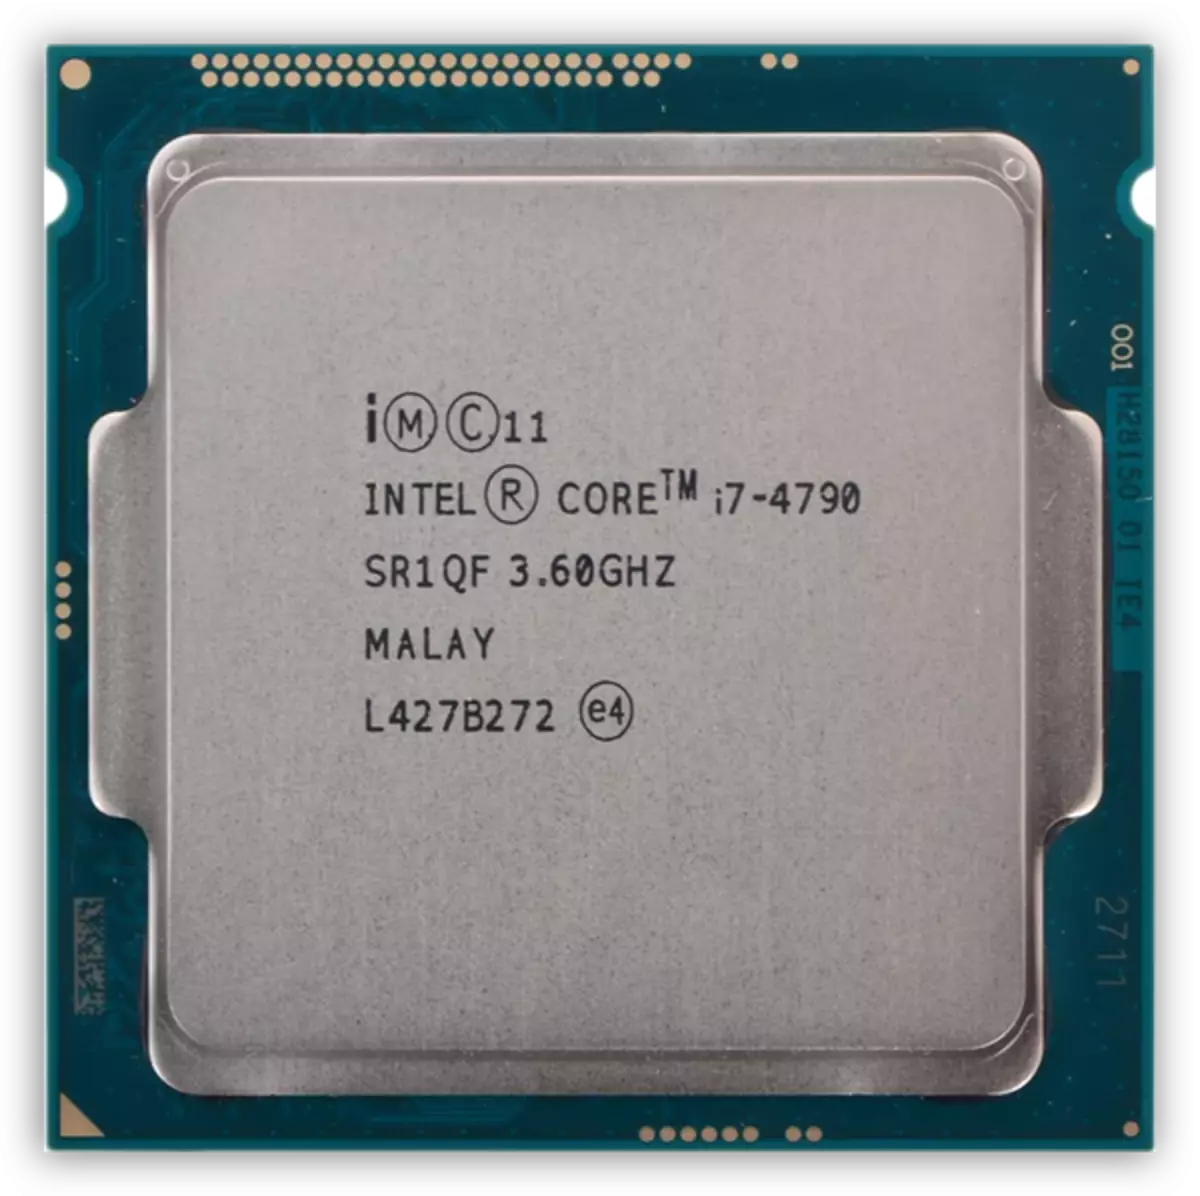 CORE I7-4790 procesor na arhitekturi Haswell